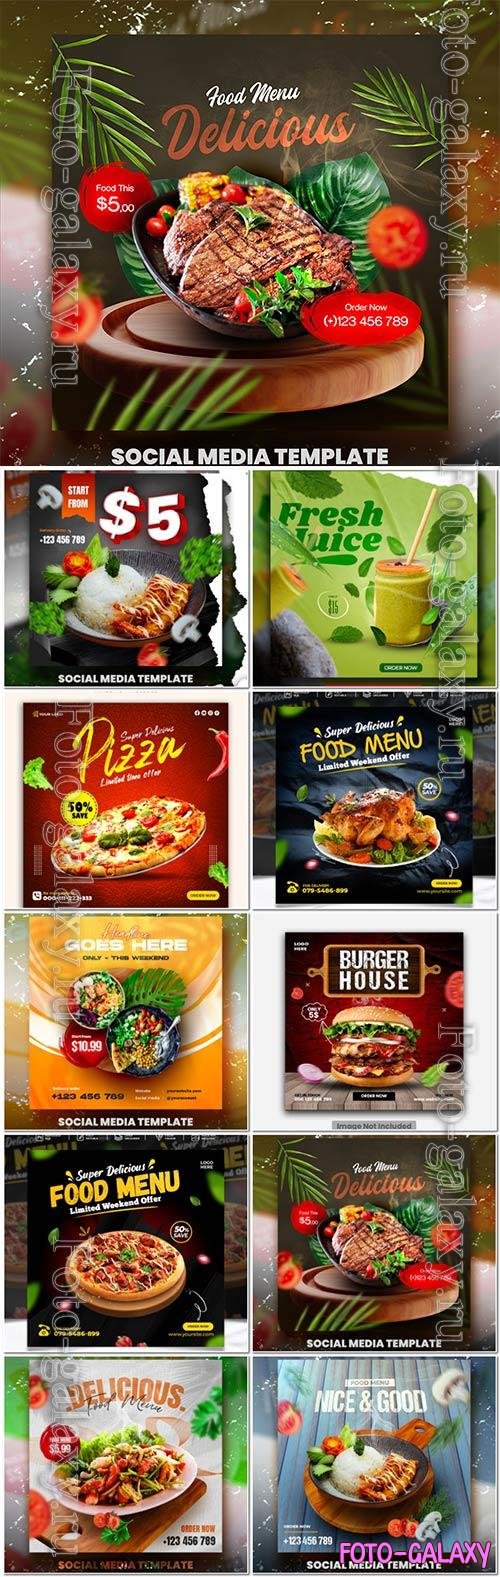 Food social media promotion psd flyer template vol 18